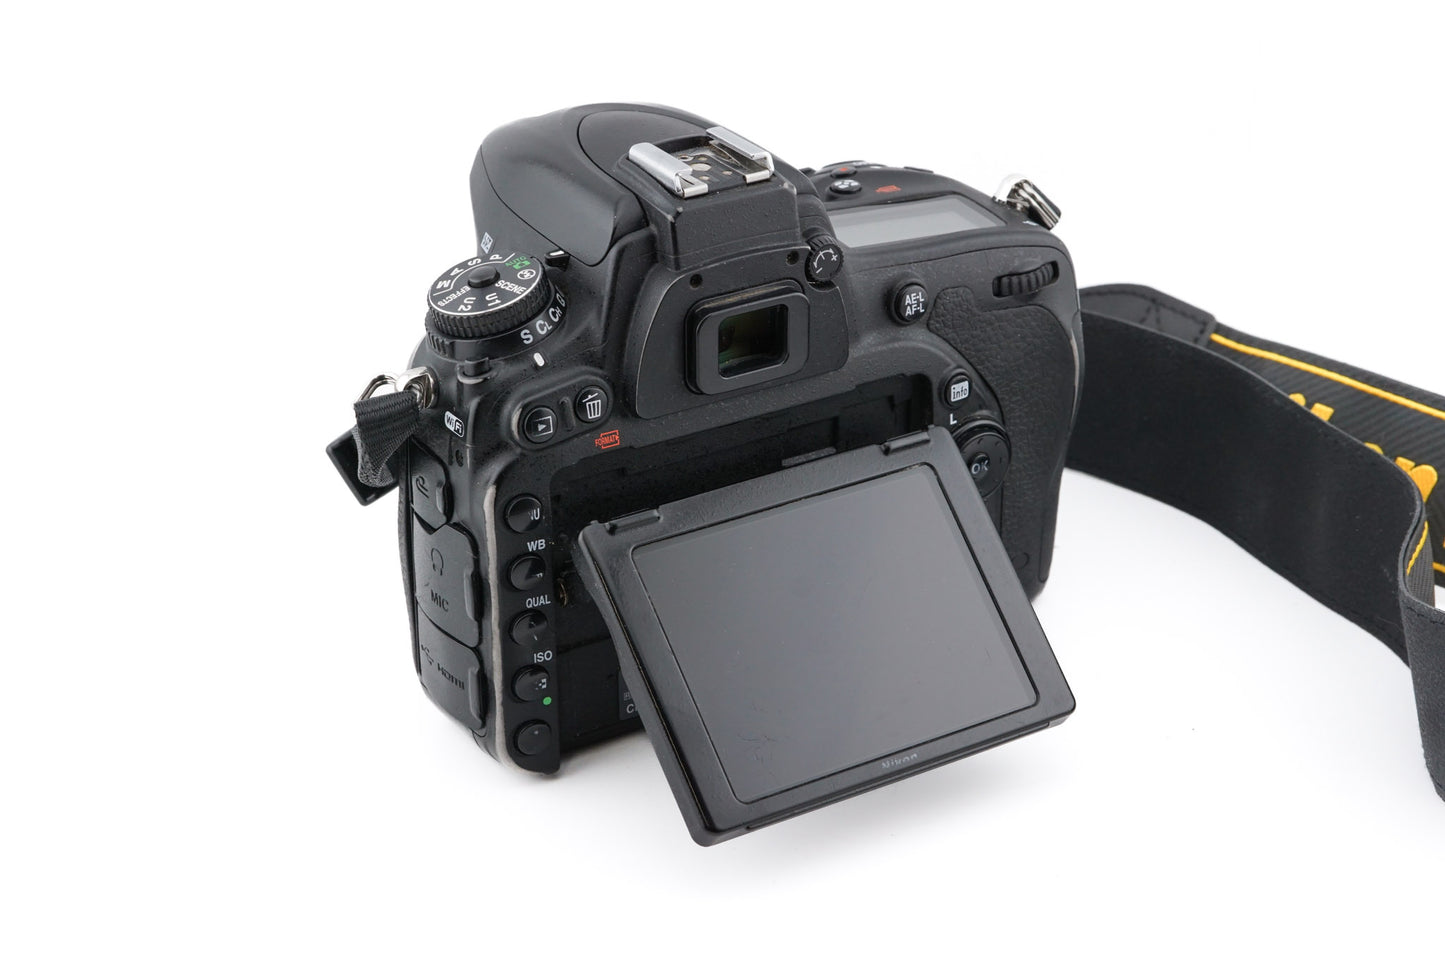 Nikon D750 - Camera – Kamerastore